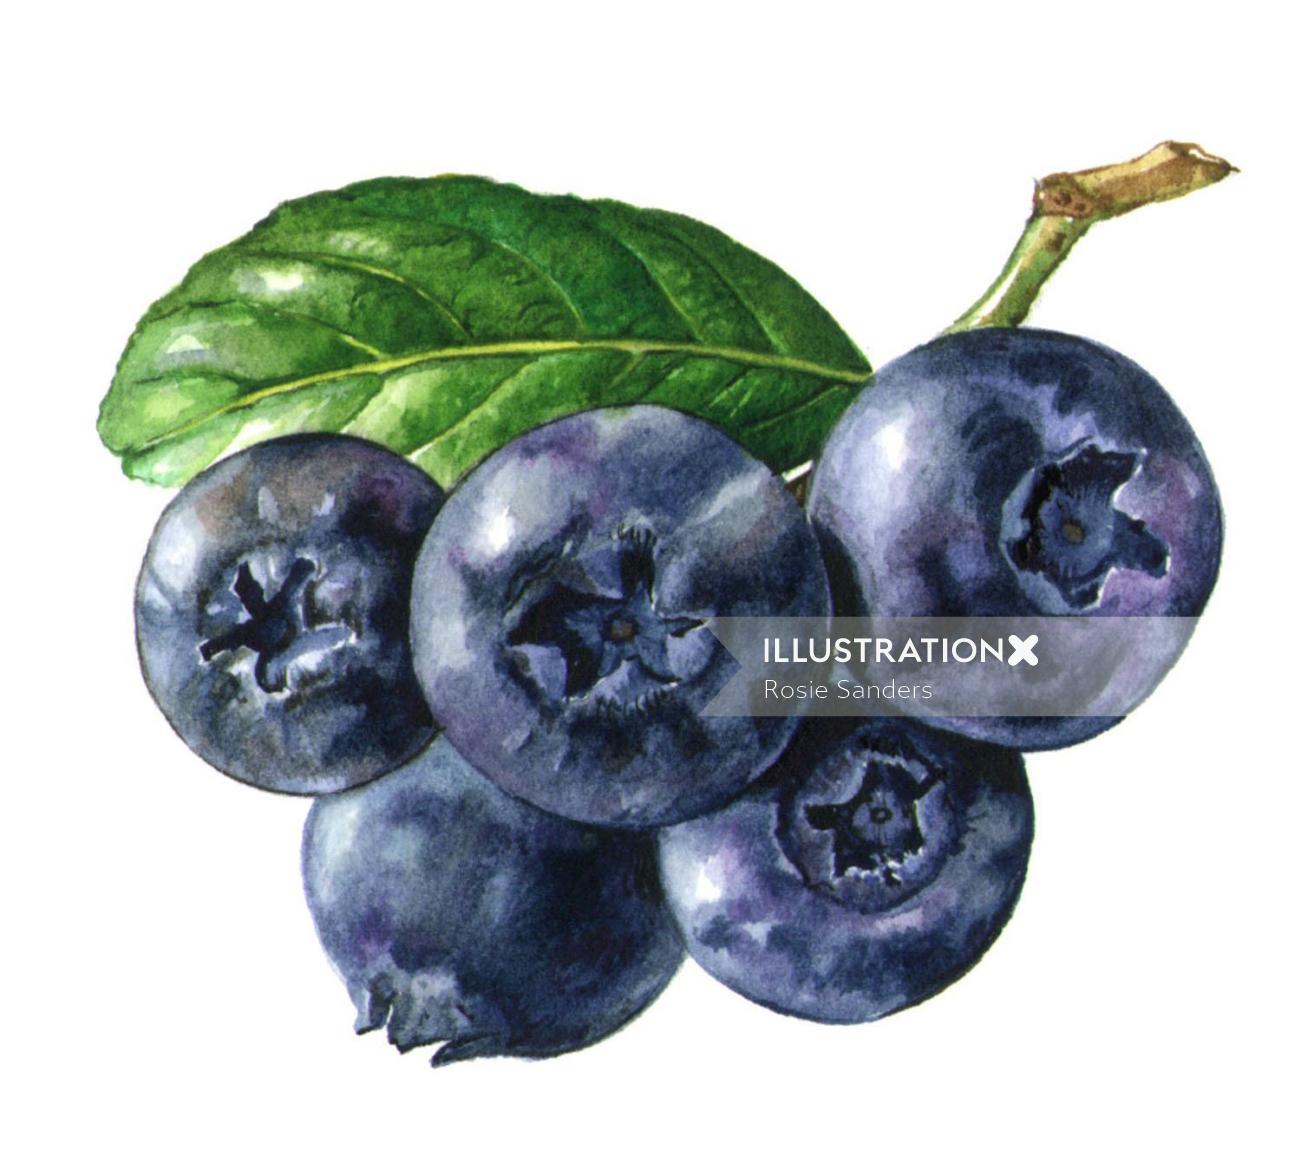 Grapes illustration by Rosie Sanders